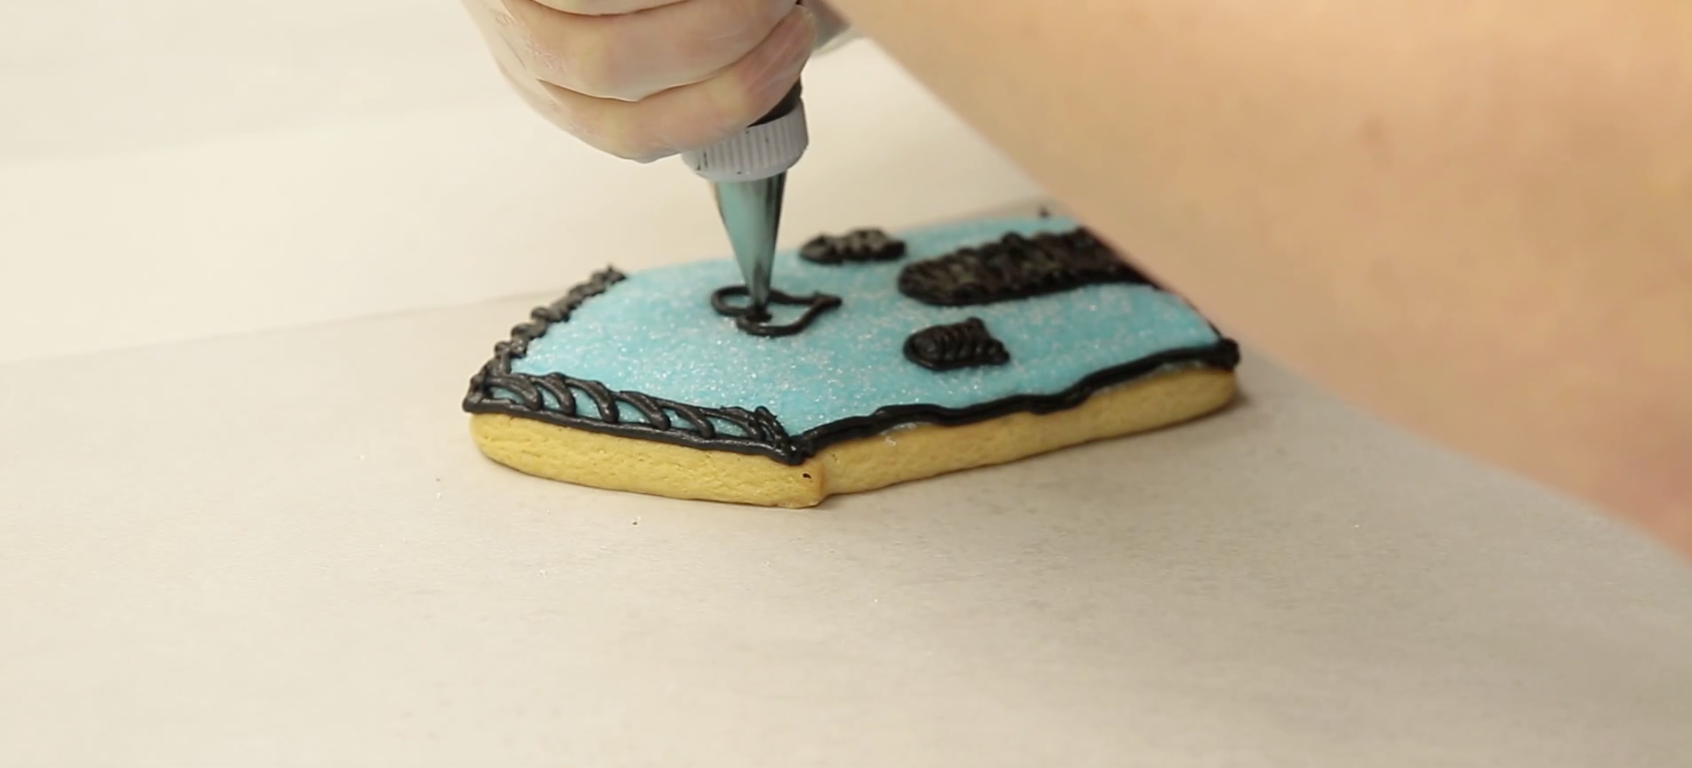 Birdhouse Cookie Decorating Tips with Barbee Cookies